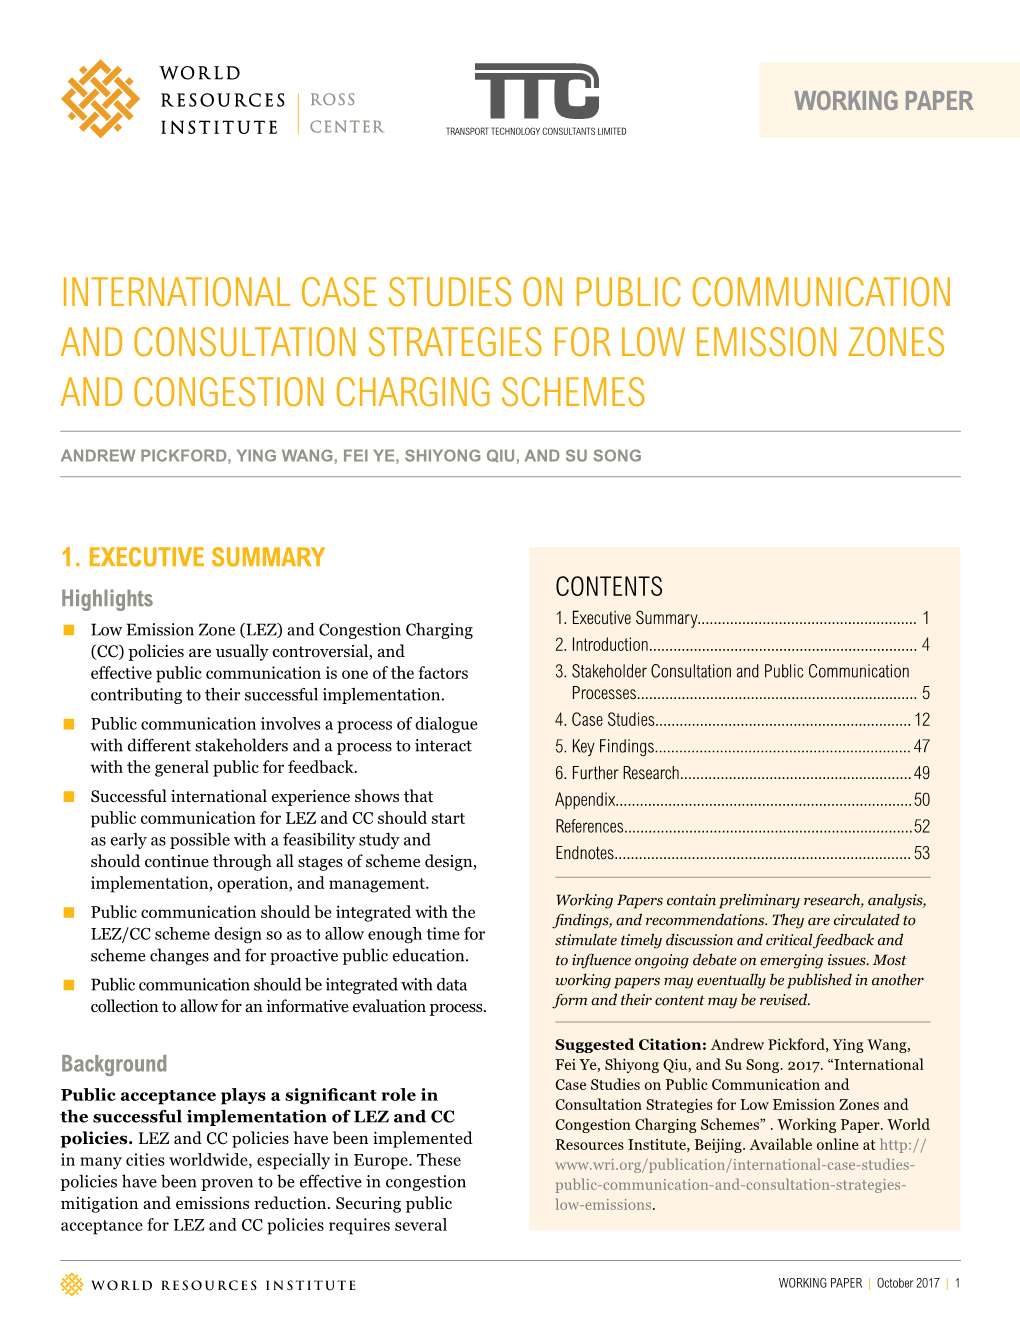 LEZ Public Communications International Case Study.Pdf